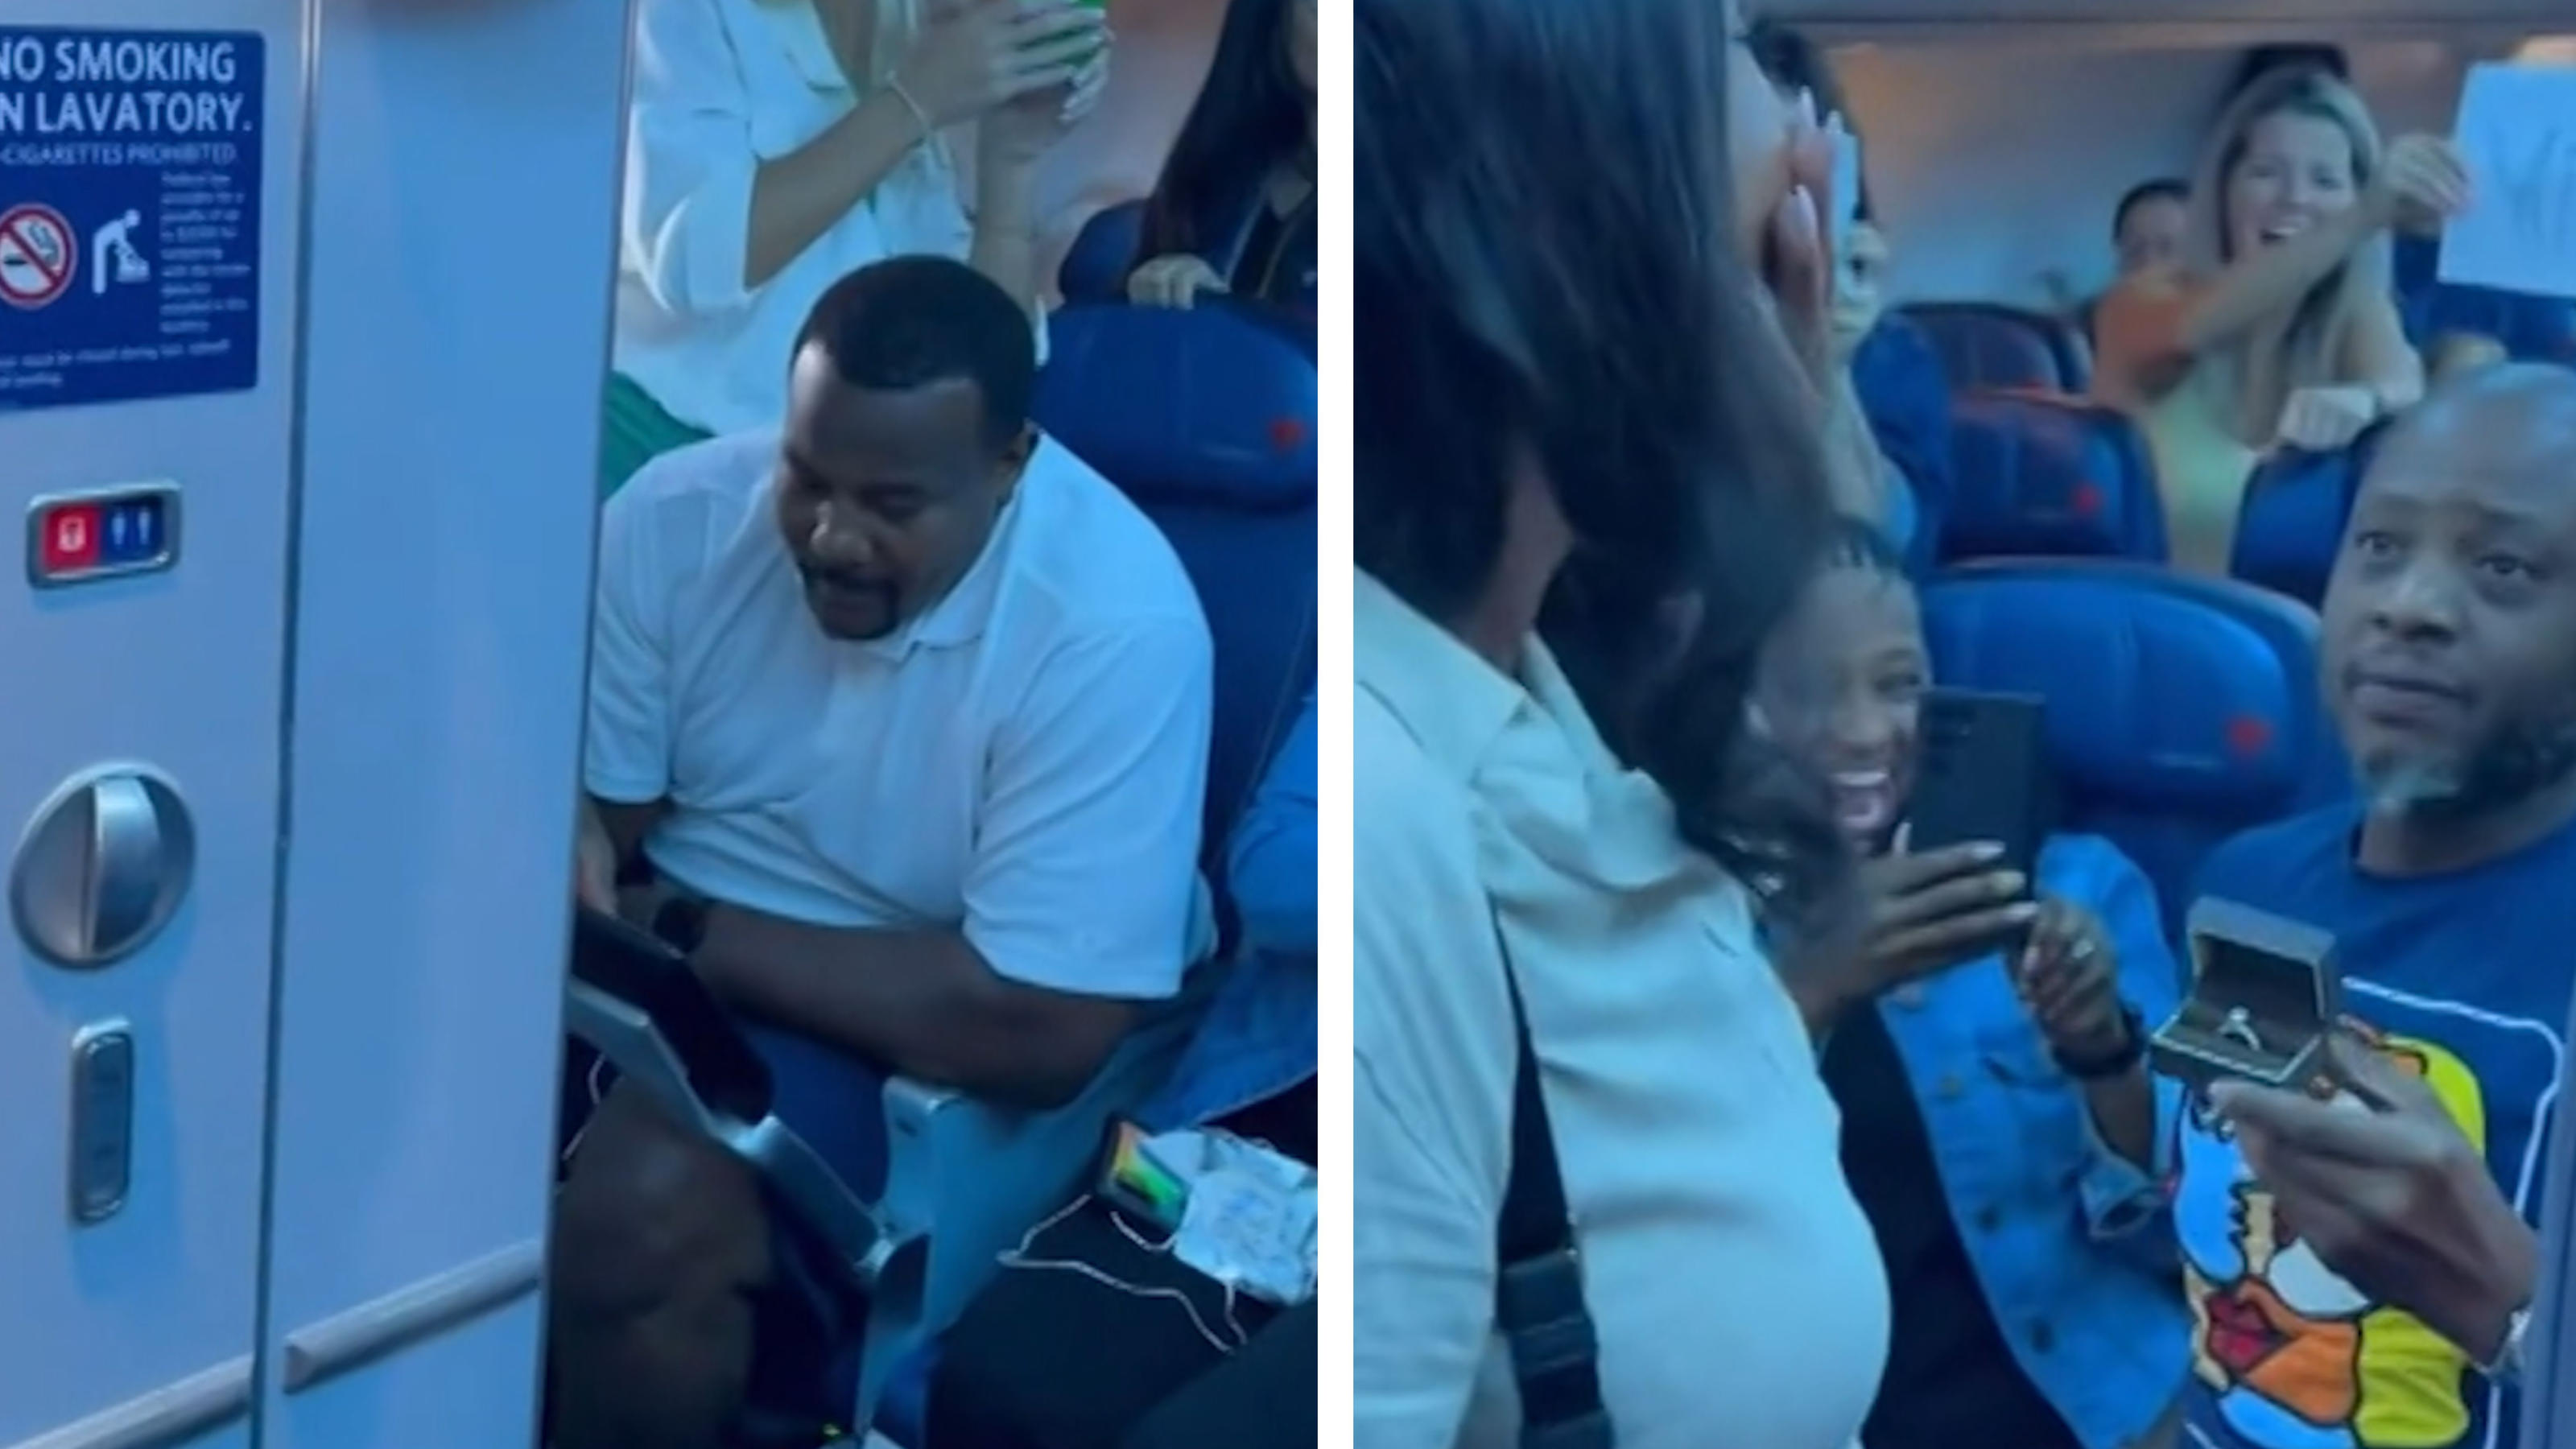 Mann hält um Hand der Freundin vor Flugzeug-Toilette an Heiratsantrag zum Runterspülen?